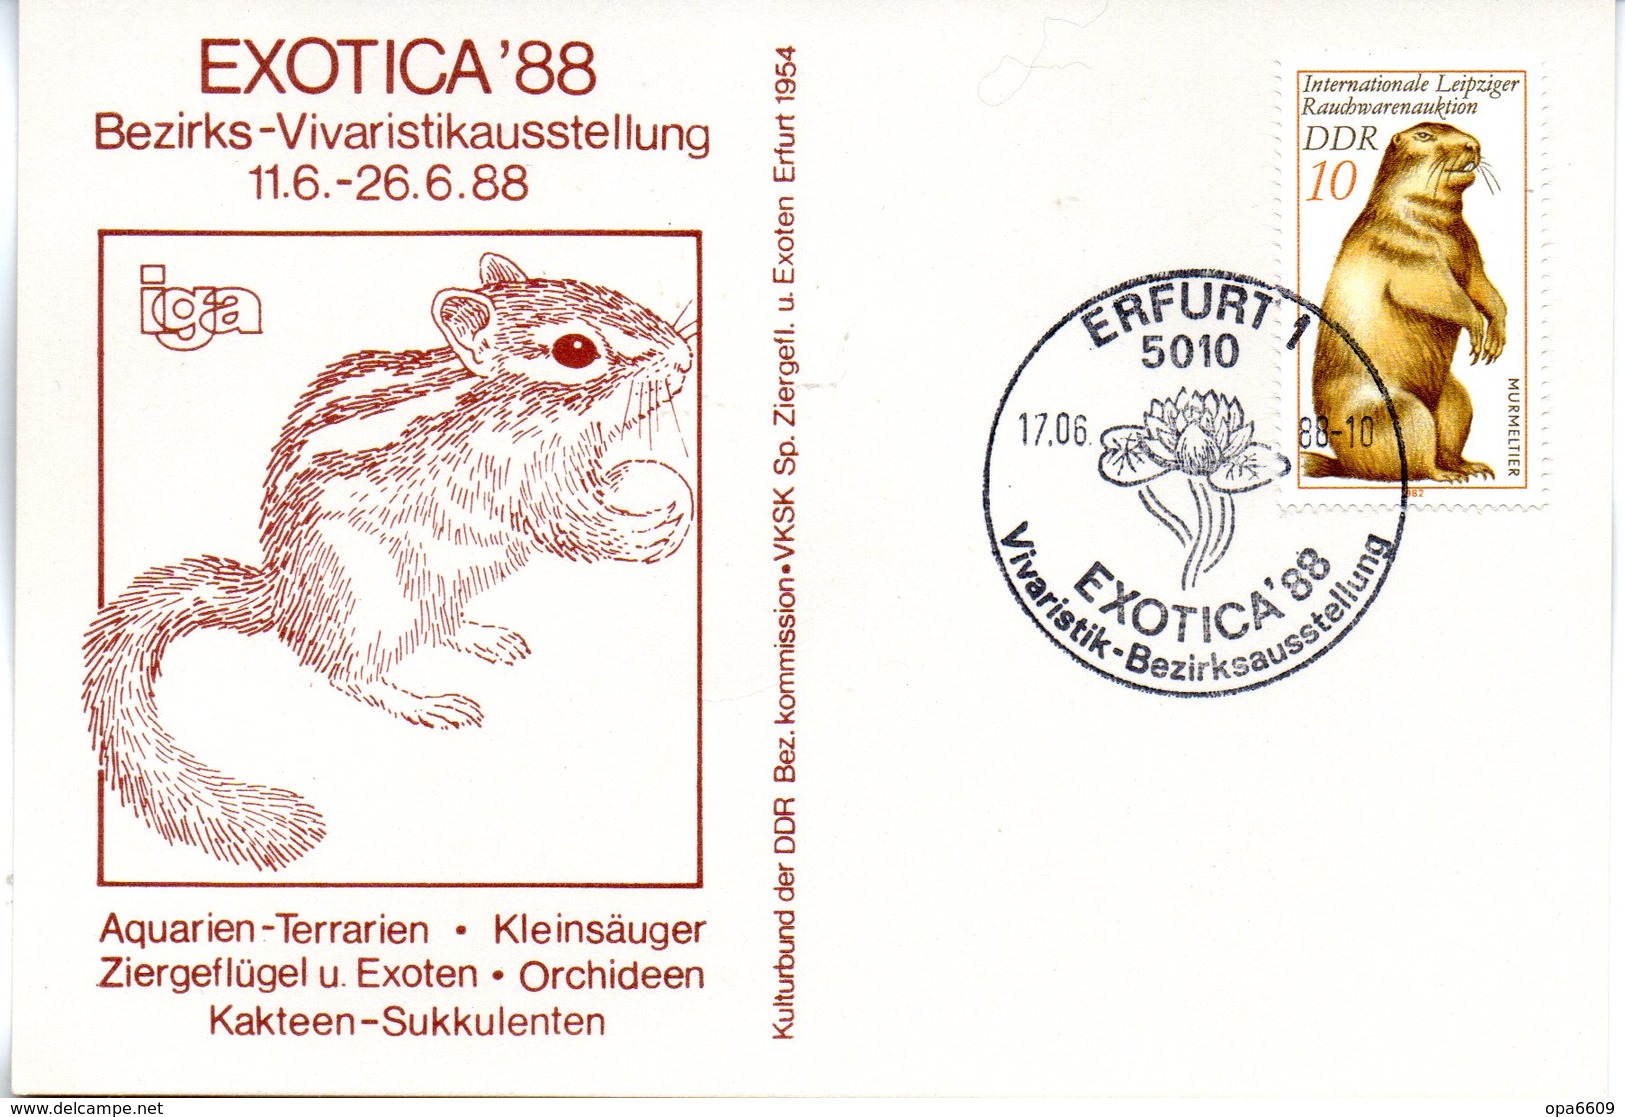 (DDR-B3) DDR Sonderkarte "Bezirks-Vivaristikausstellung EXOTICA'88", EF Mi 2677, SSt.17.6.1988 ERFURT 1 - Lettres & Documents